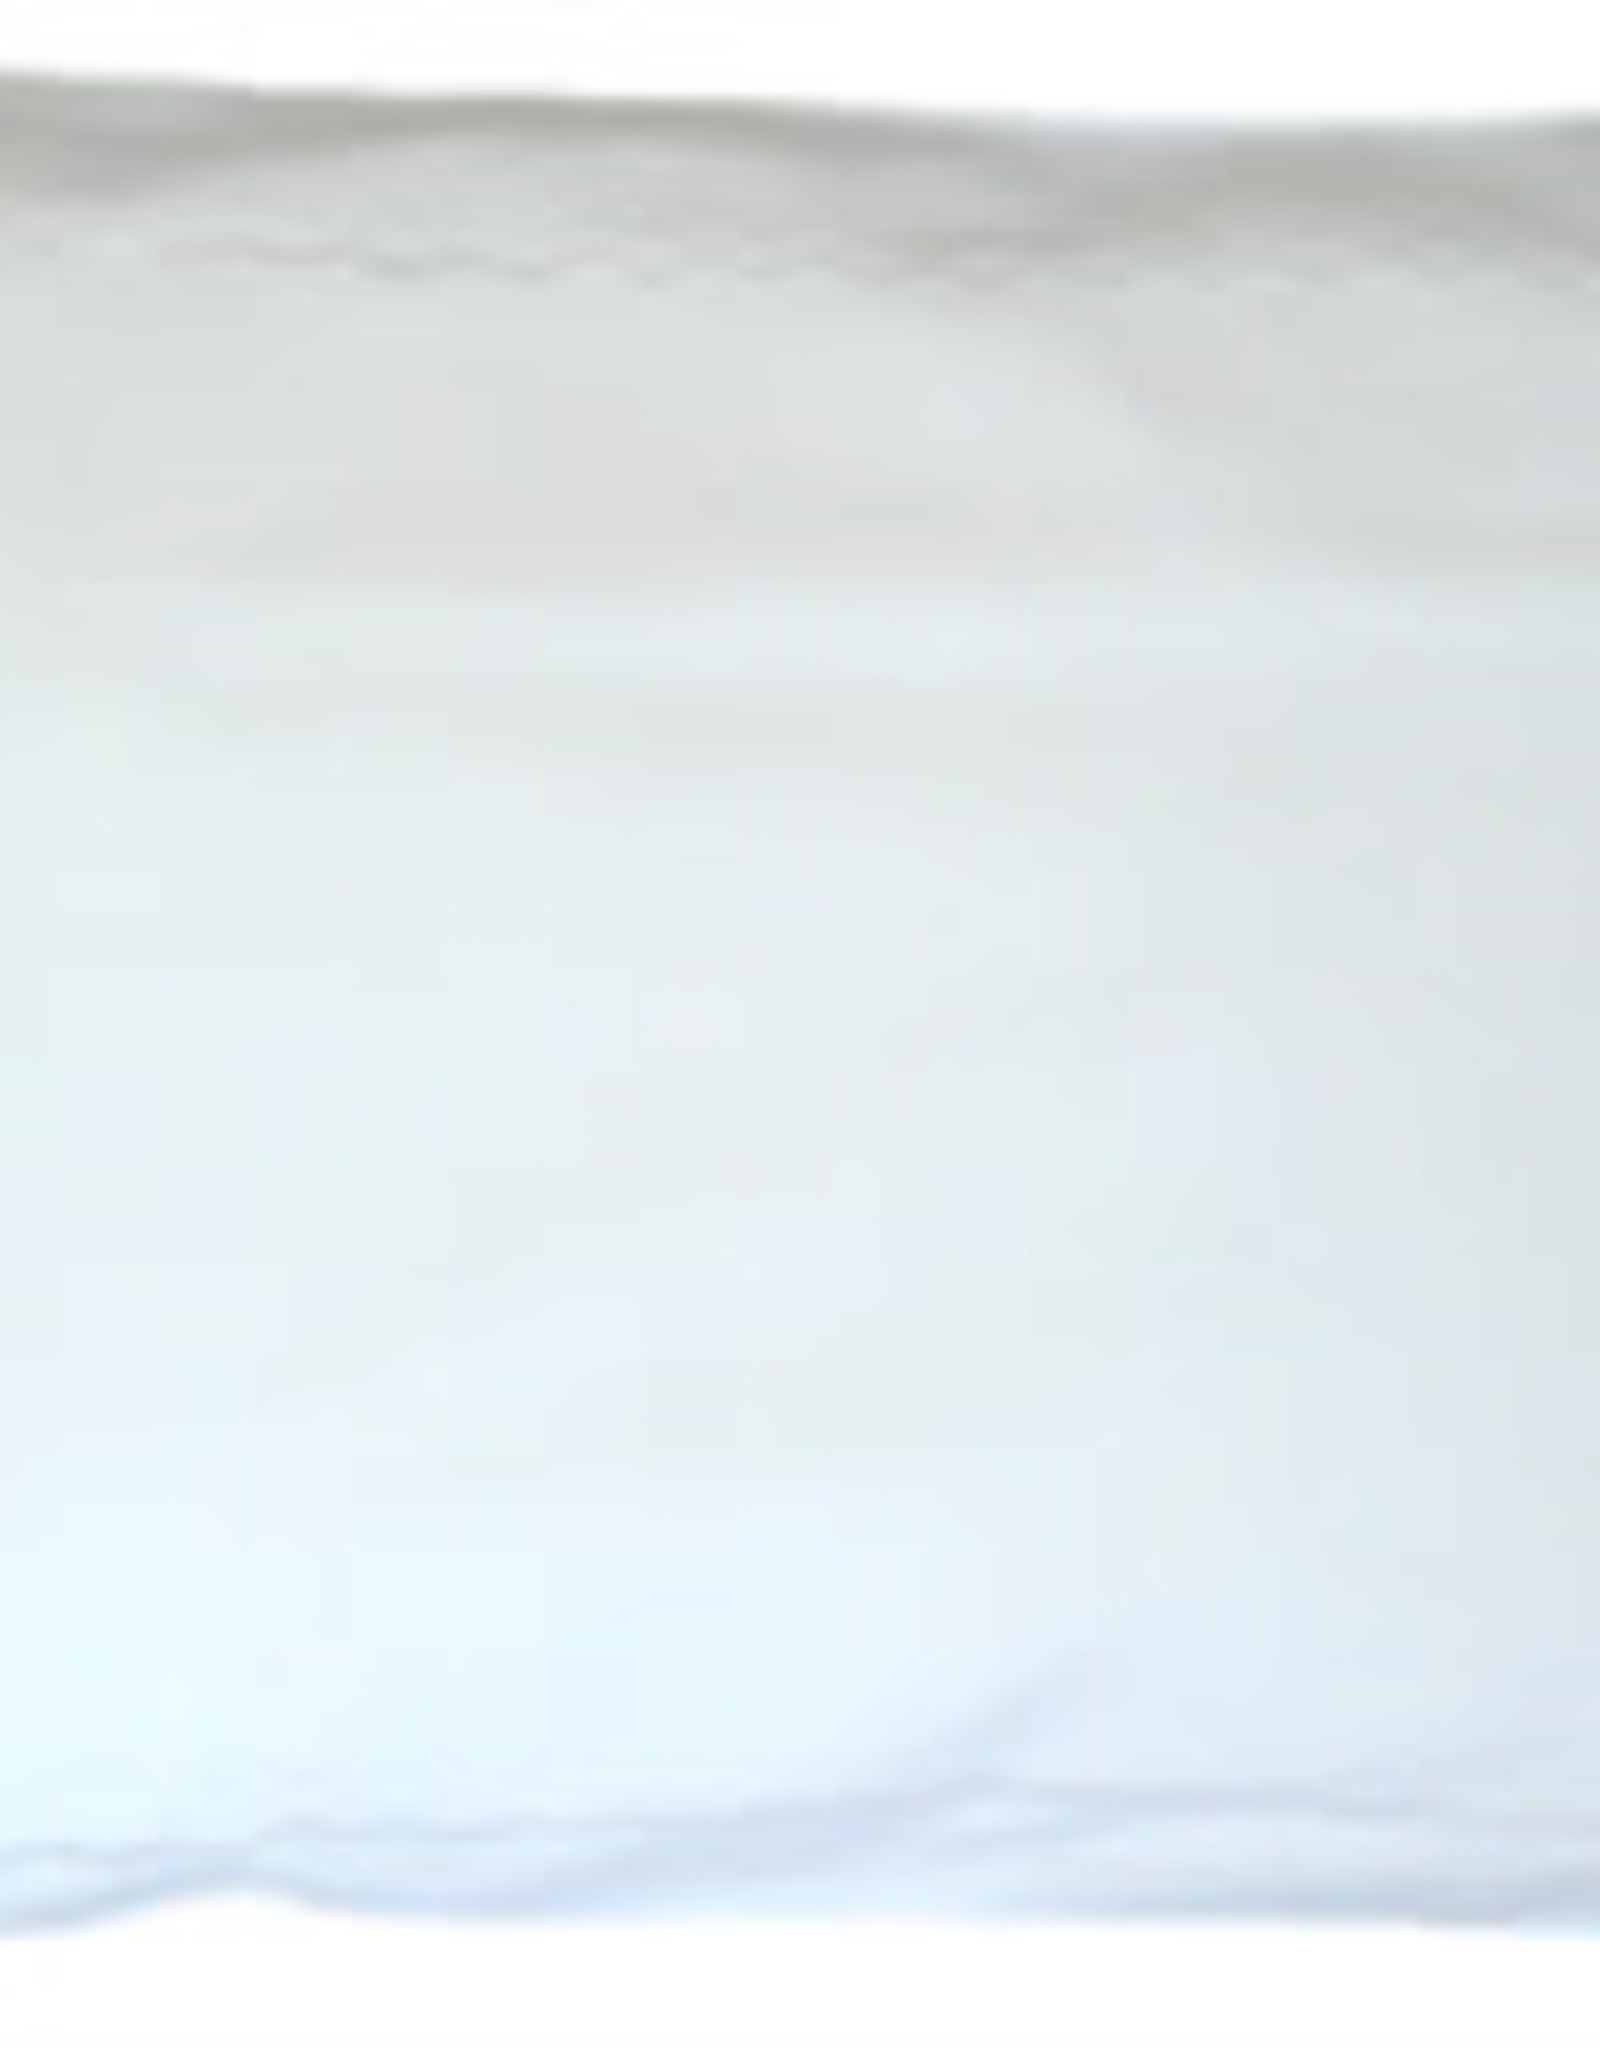 gerbrend Creations Pillow Interior Pink Scallop 12x16